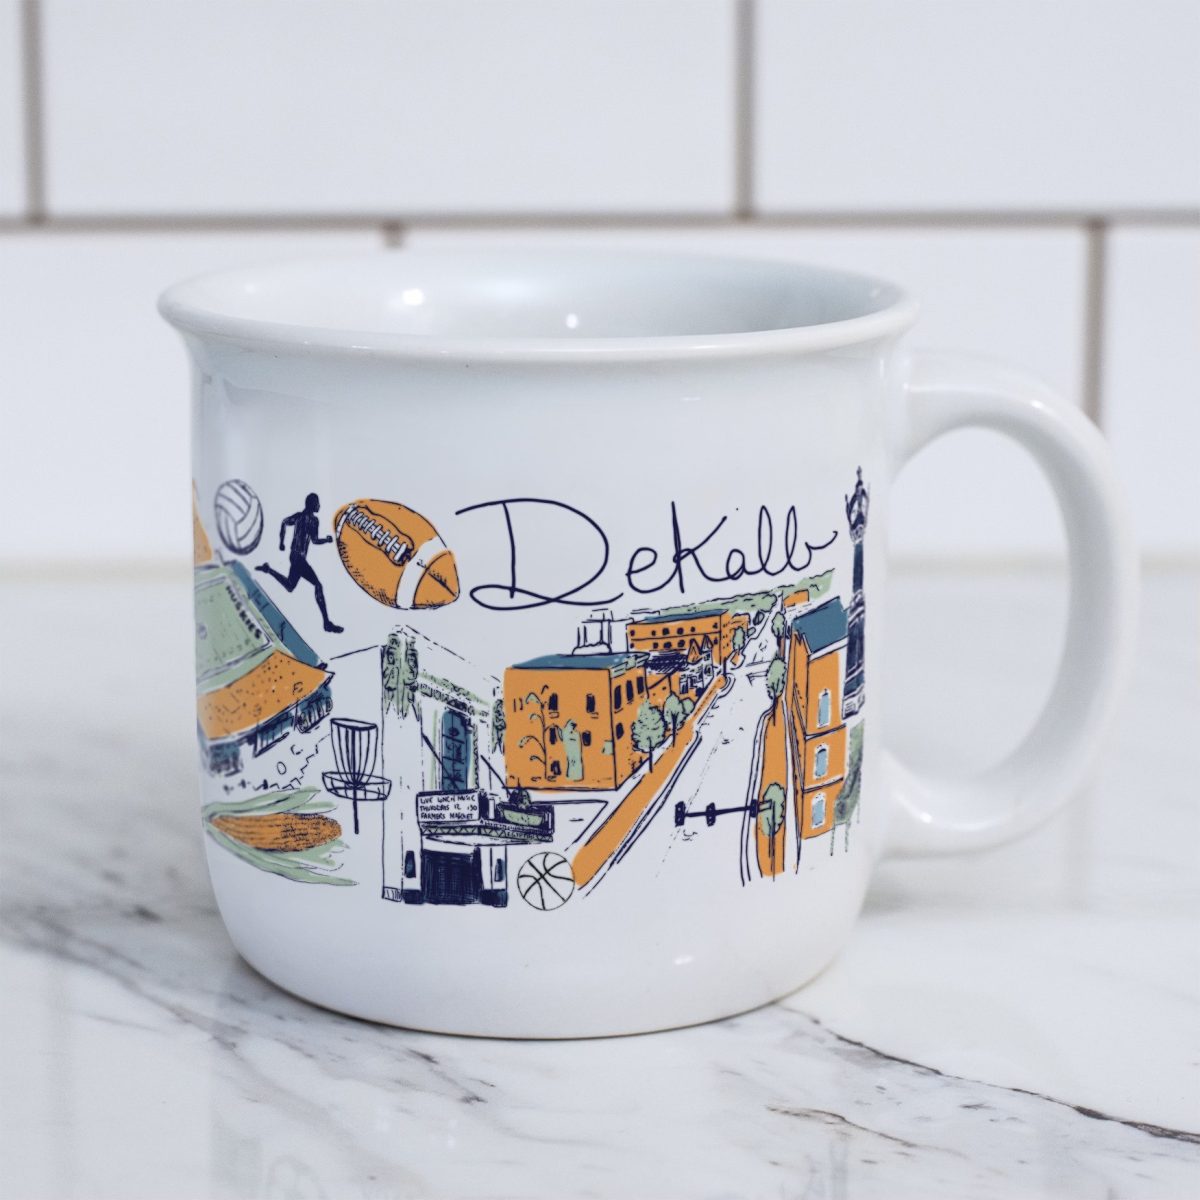 A mug sits on a marble counter. Ashley Klockenga, an NIU alum, has created a mug that embodies the spirit of DeKalb. (Courtesy of Ashley Klockenga)